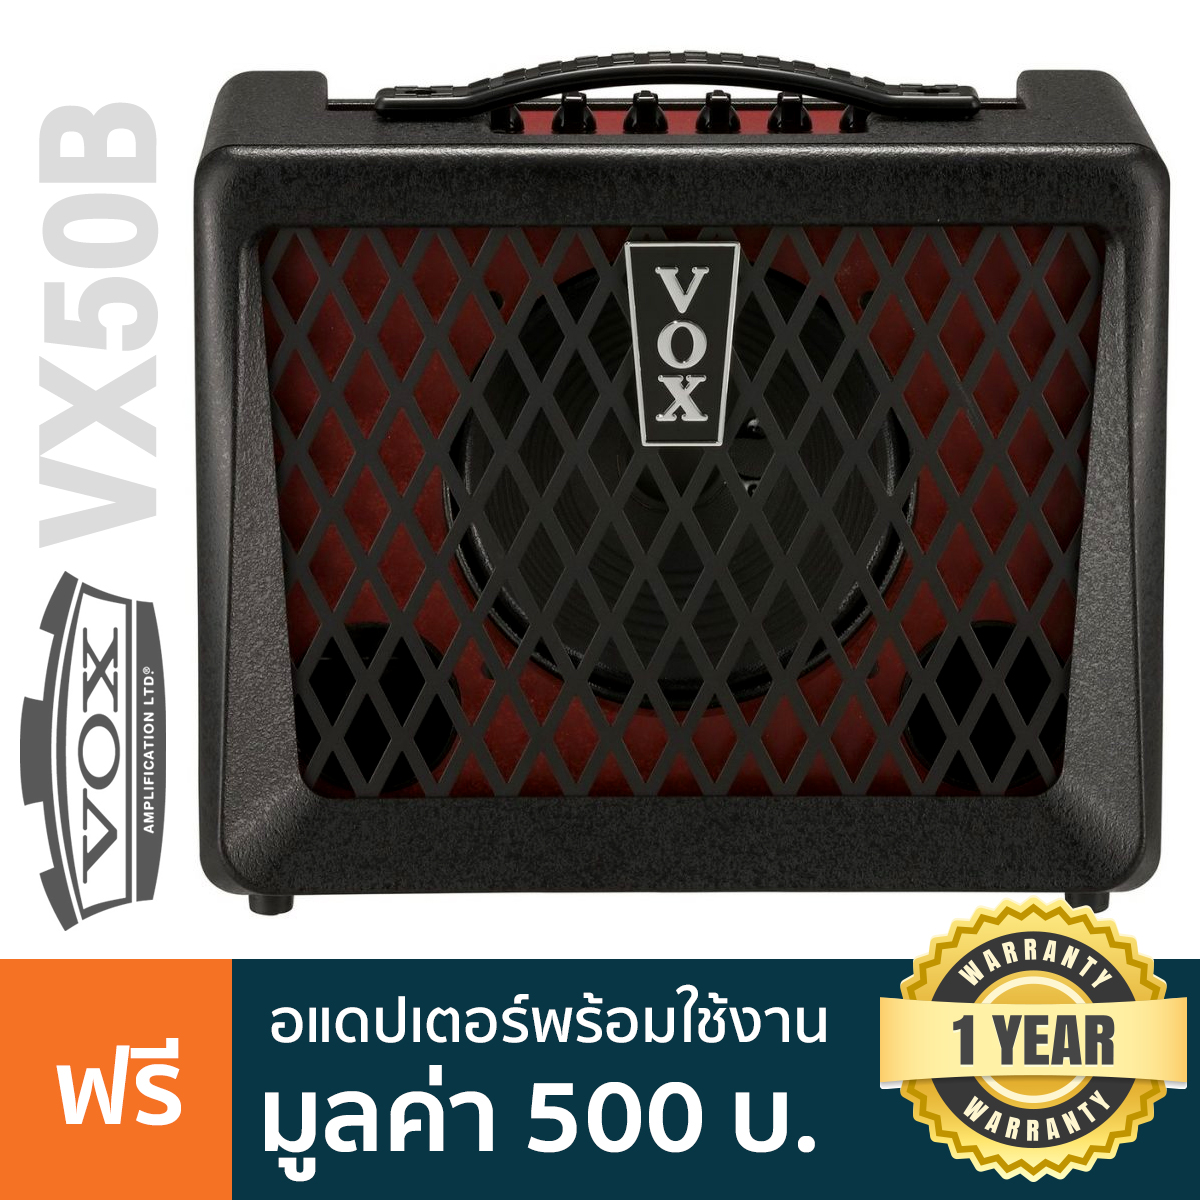 Vox® VX50BA Bass Amp แอมป์เบส 50 วัตต์ พร้อมเทคโนโลยี Nutube ให้เสียงเสมือนแอมป์หลอดจริง มีเอฟเฟค Compressor และ Drive ในตัว  **ประกันศูนย์ 1 ปี**